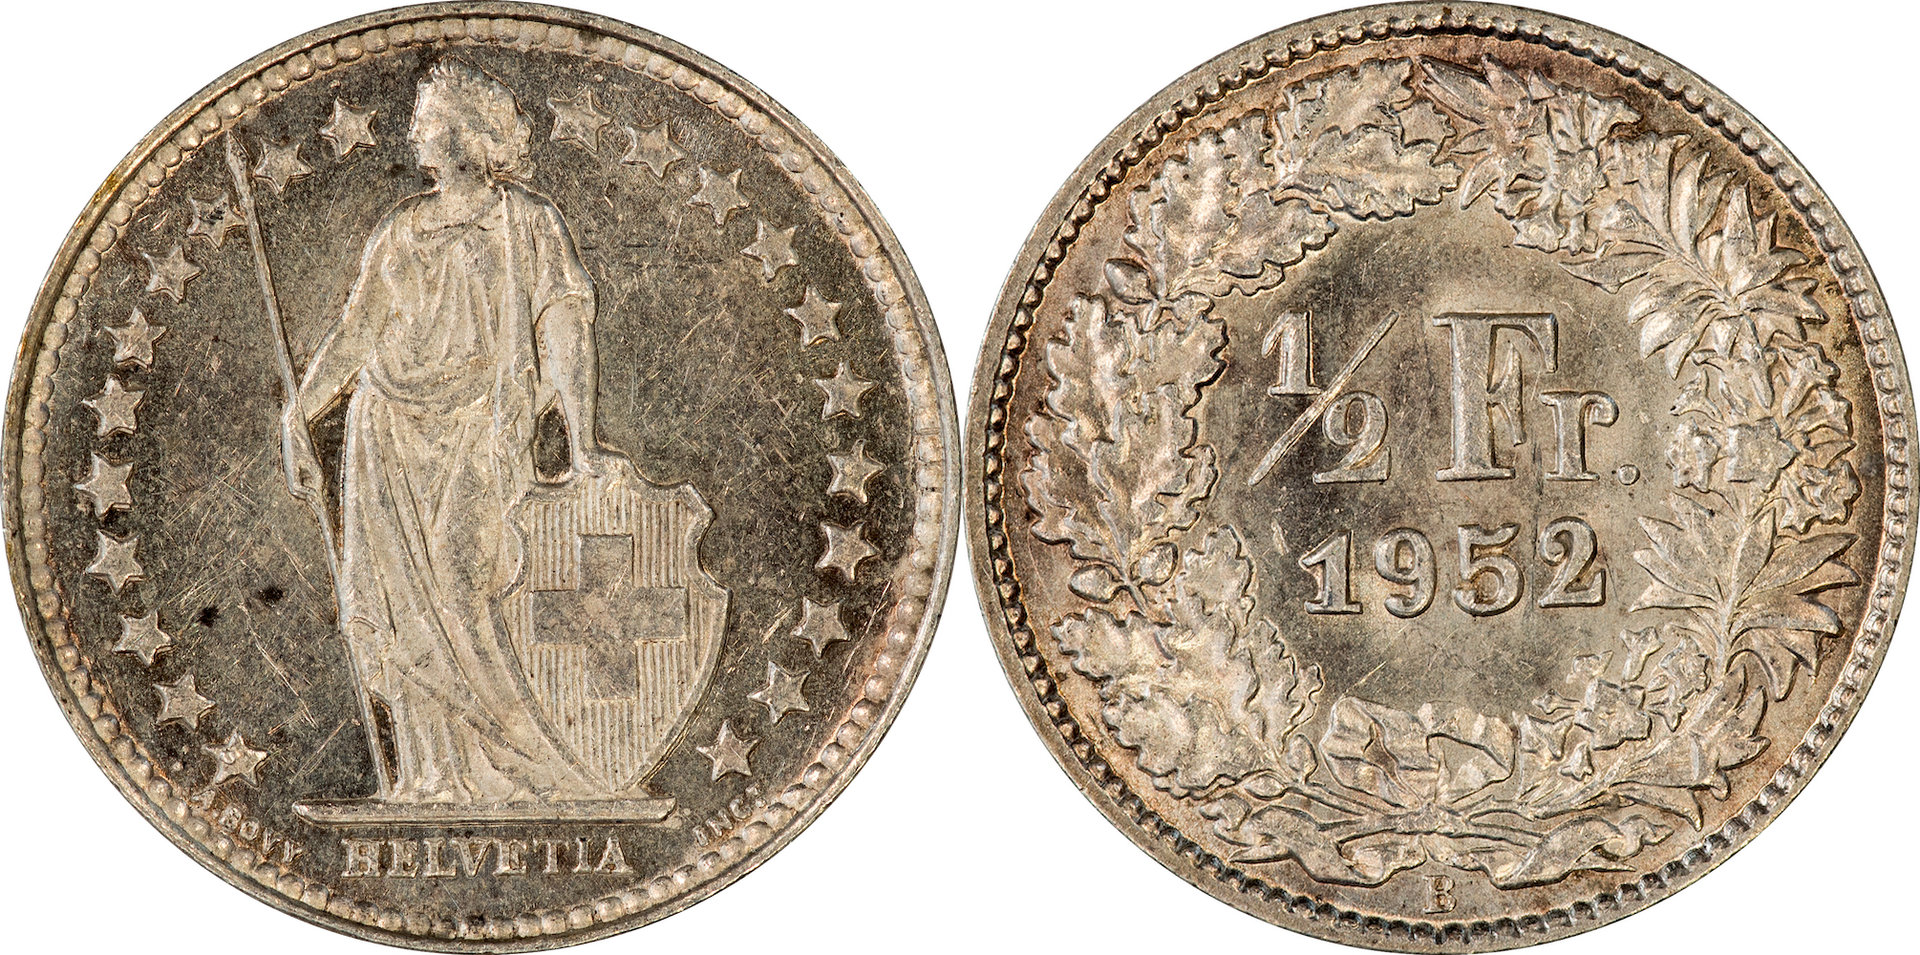 Switzerland - 1952 Half Franc.jpg